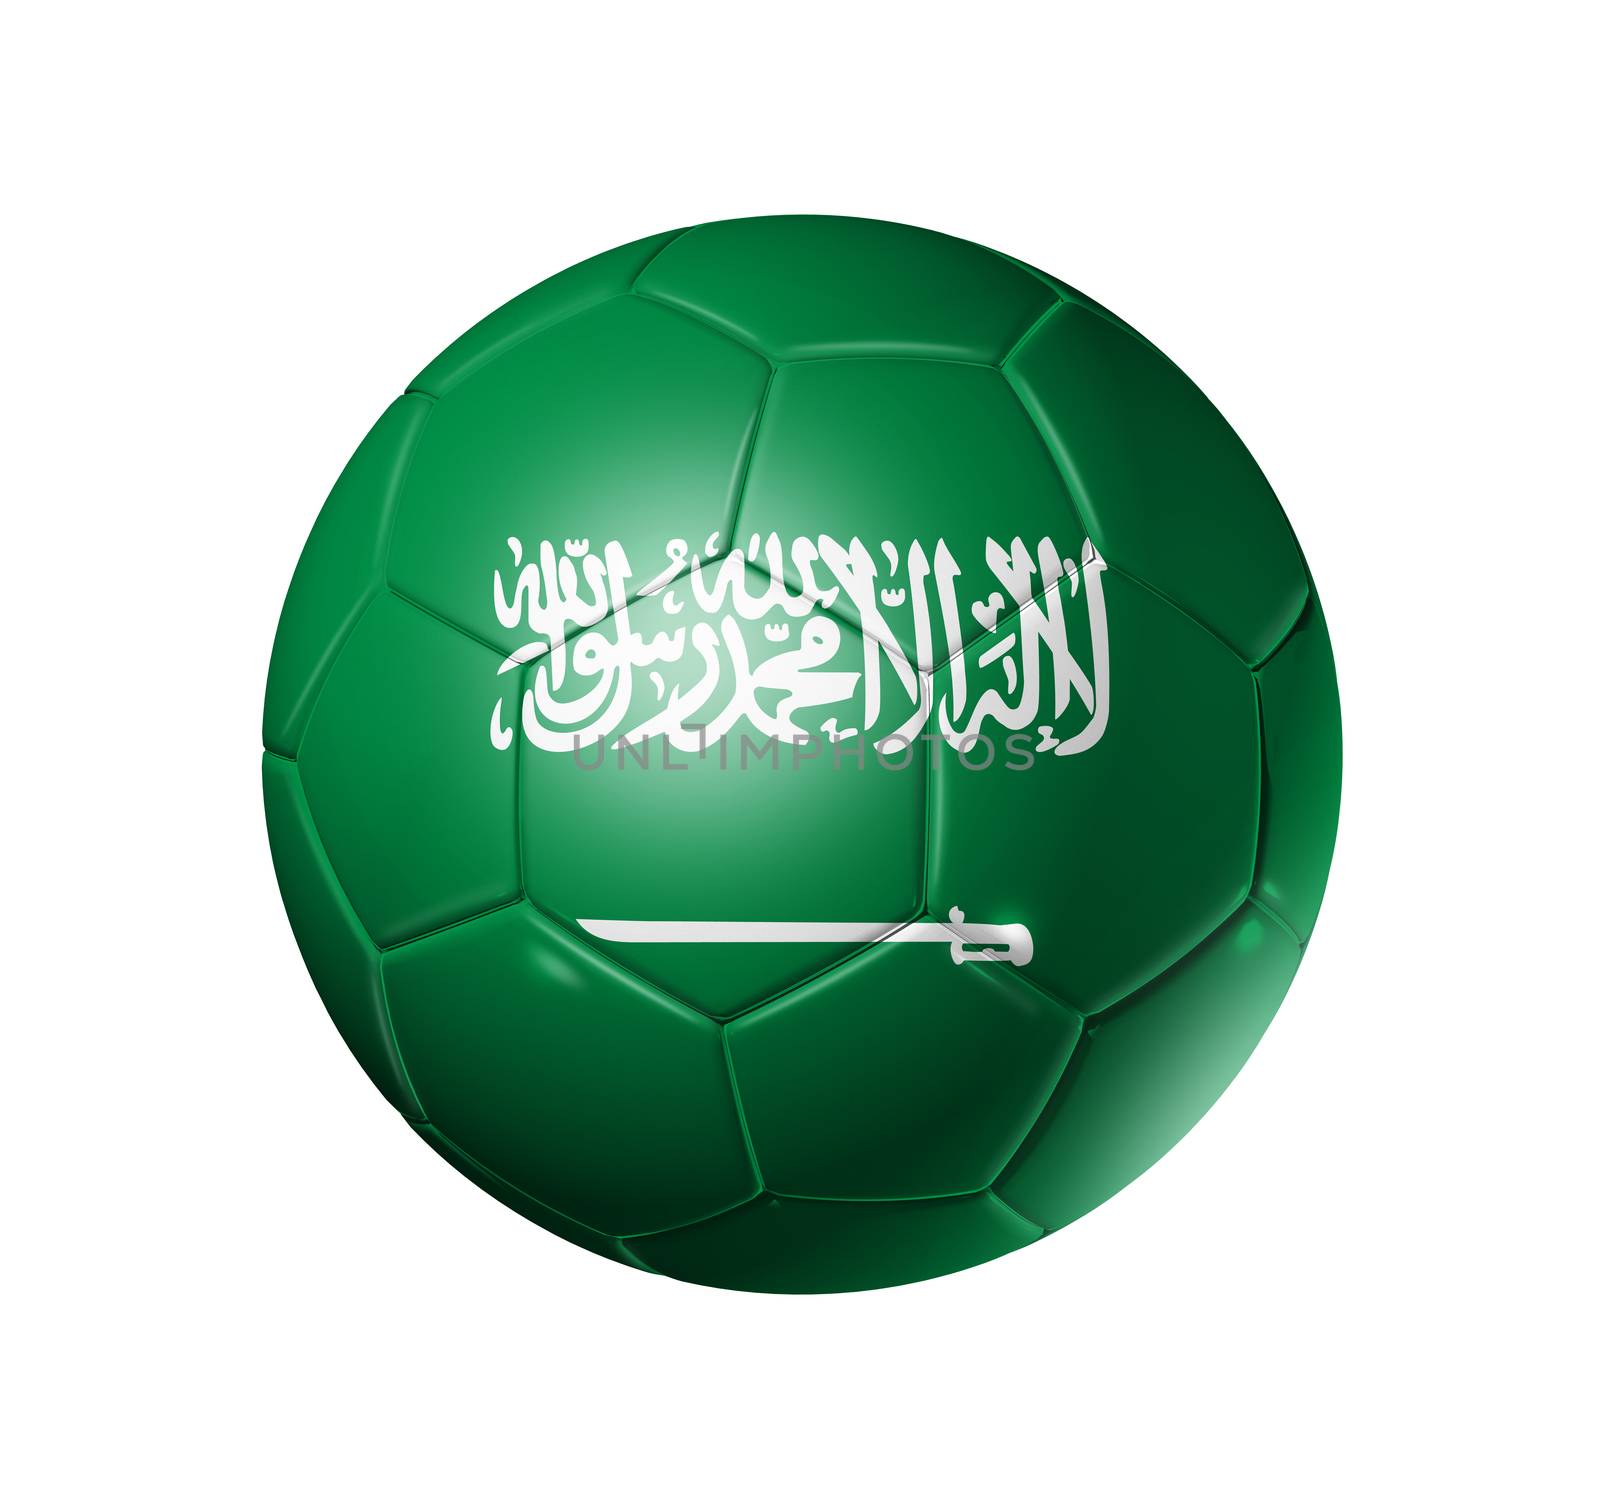 3D soccer ball with Saudi Arabia team flag. isolated on white.